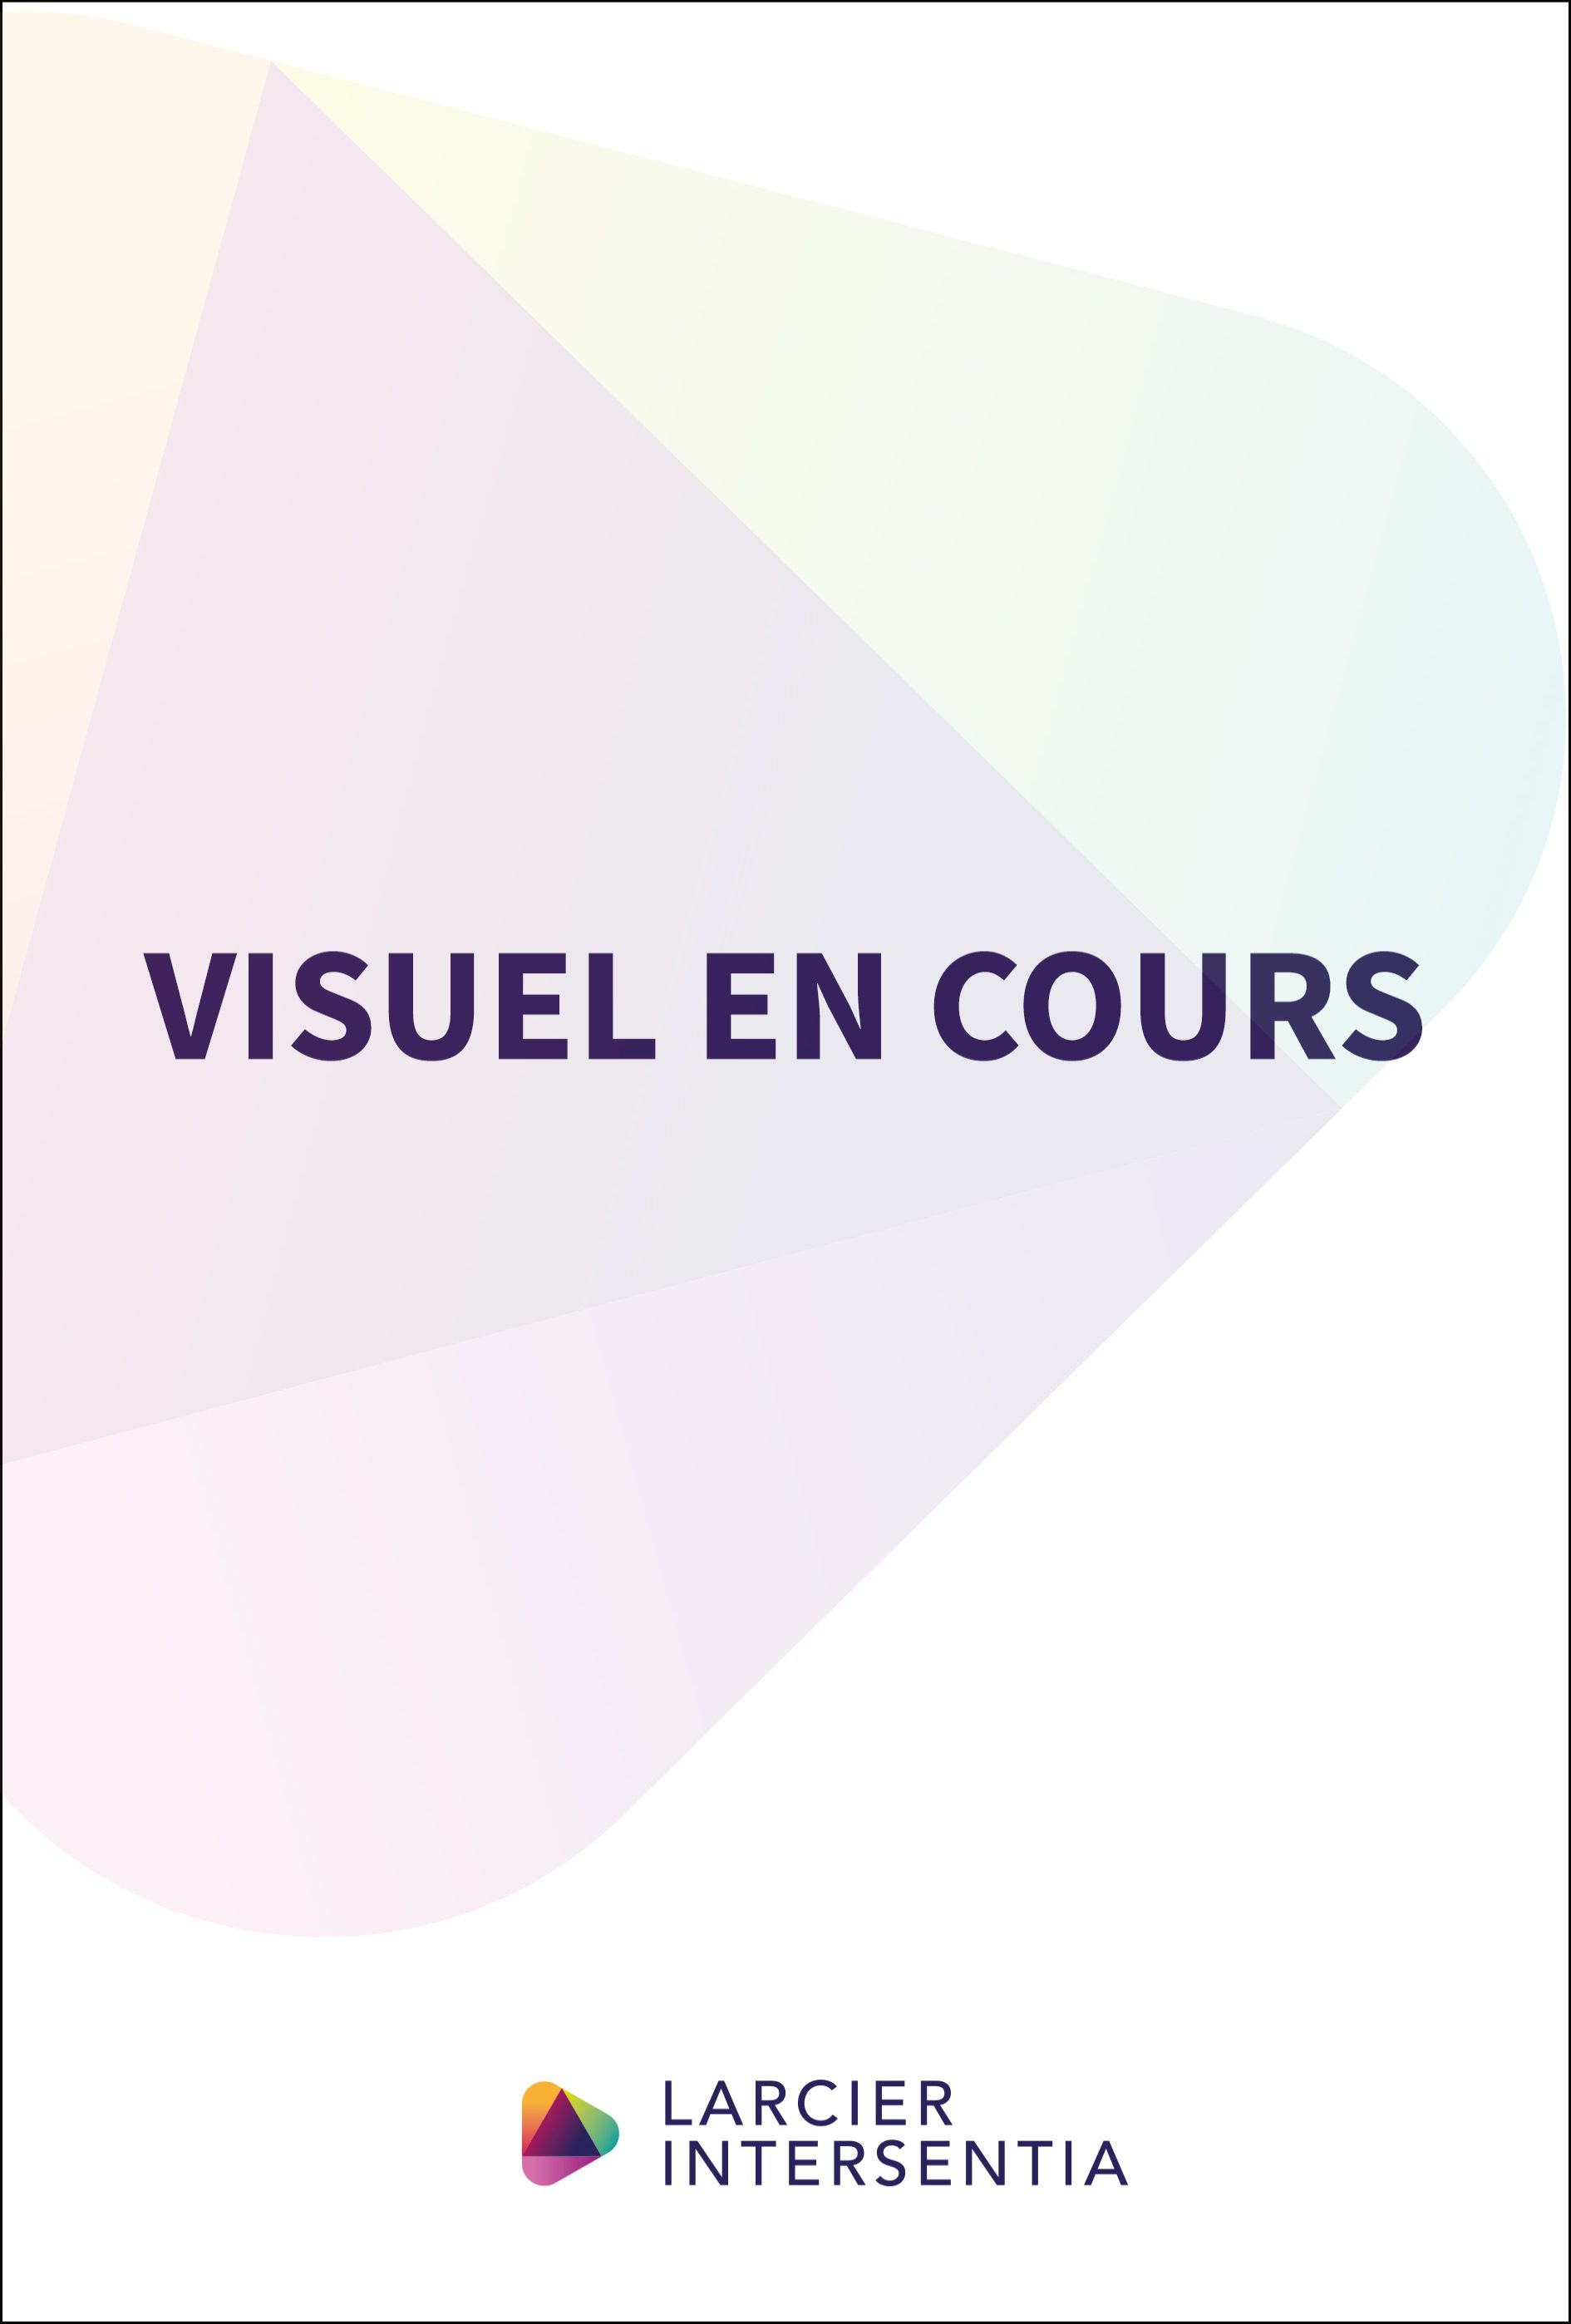 Astuces & Conseils Business Database